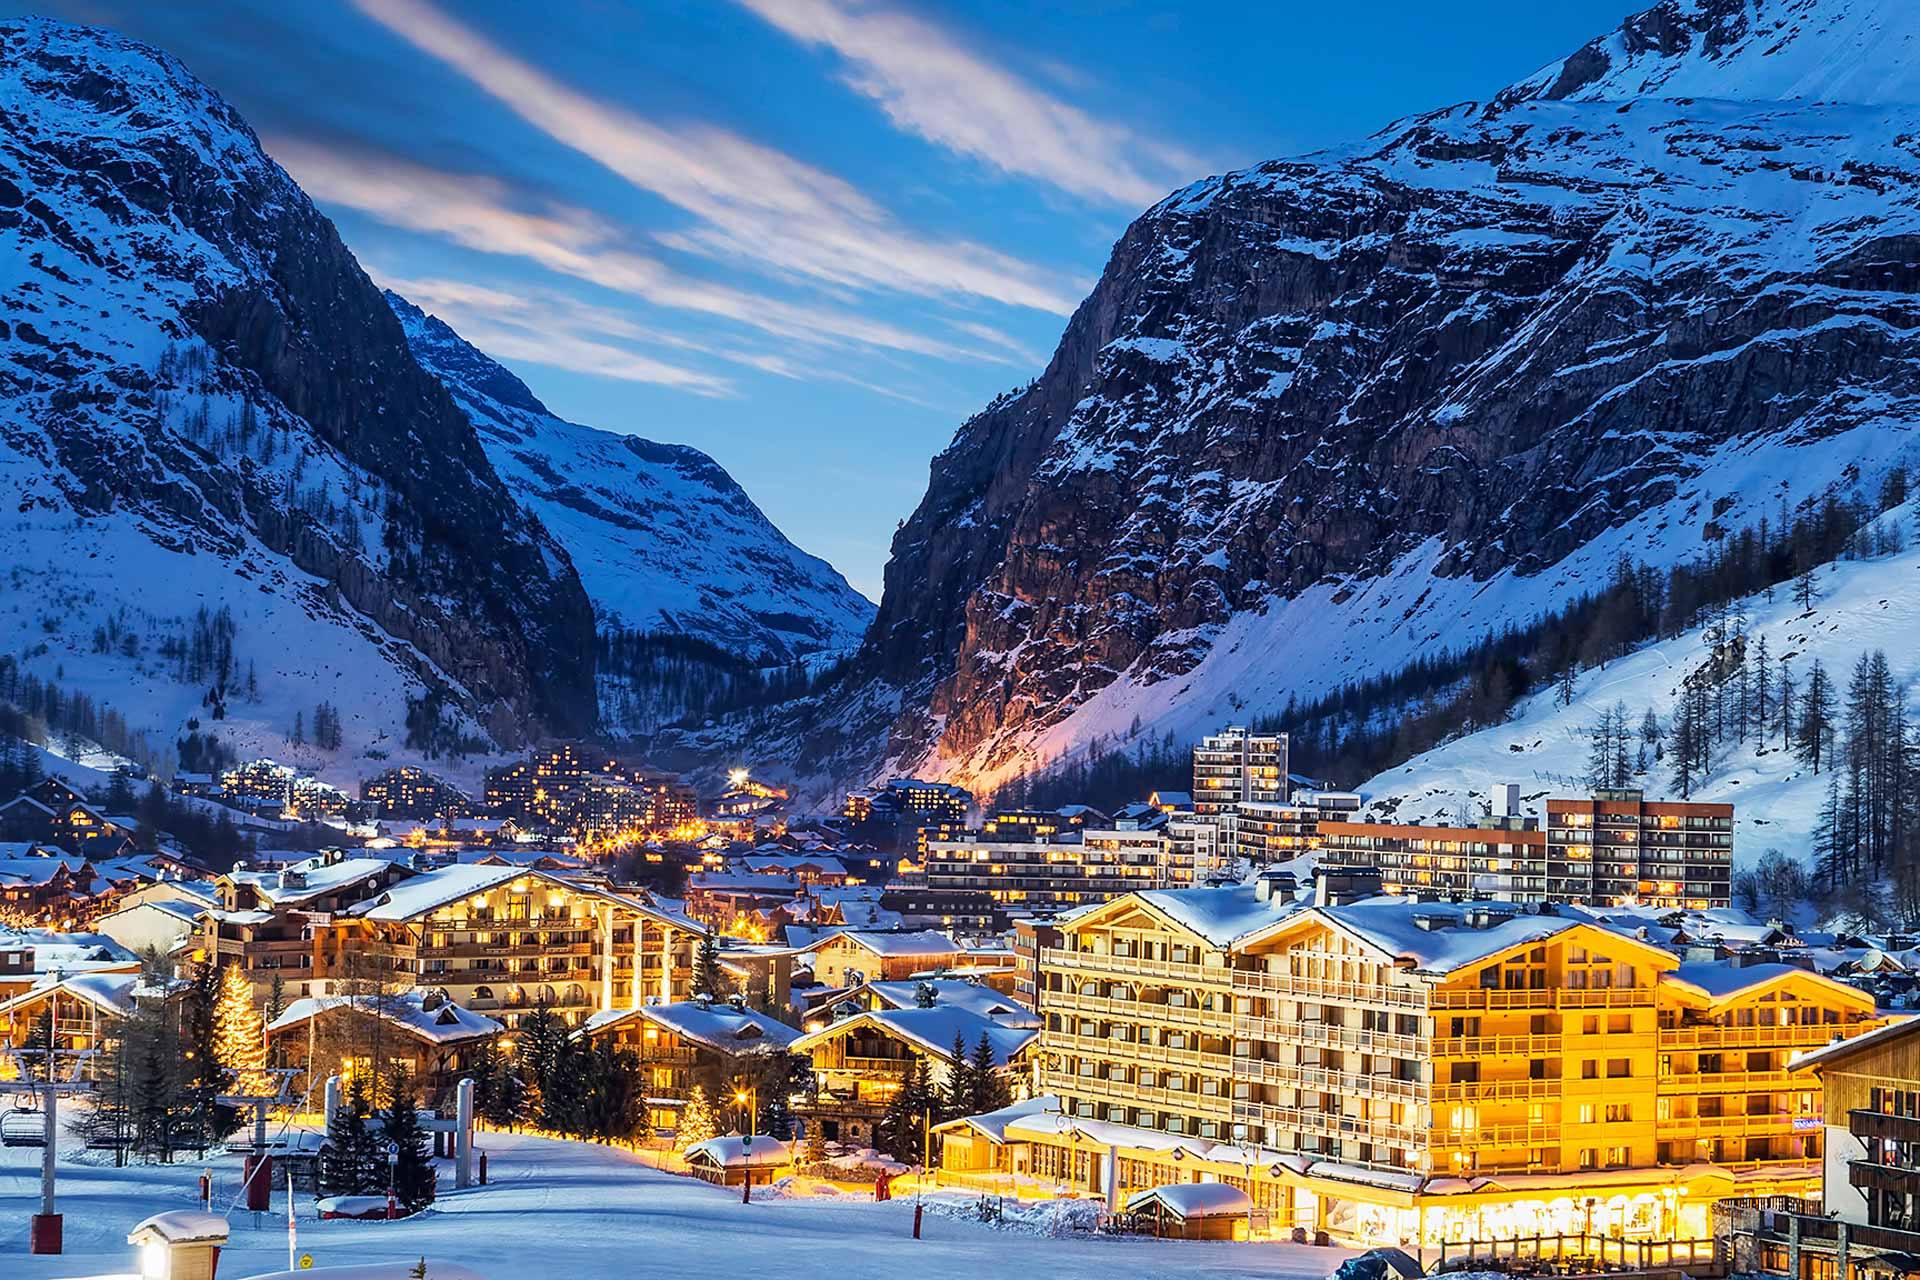 The Best Ski Resorts for Beginners Around the World